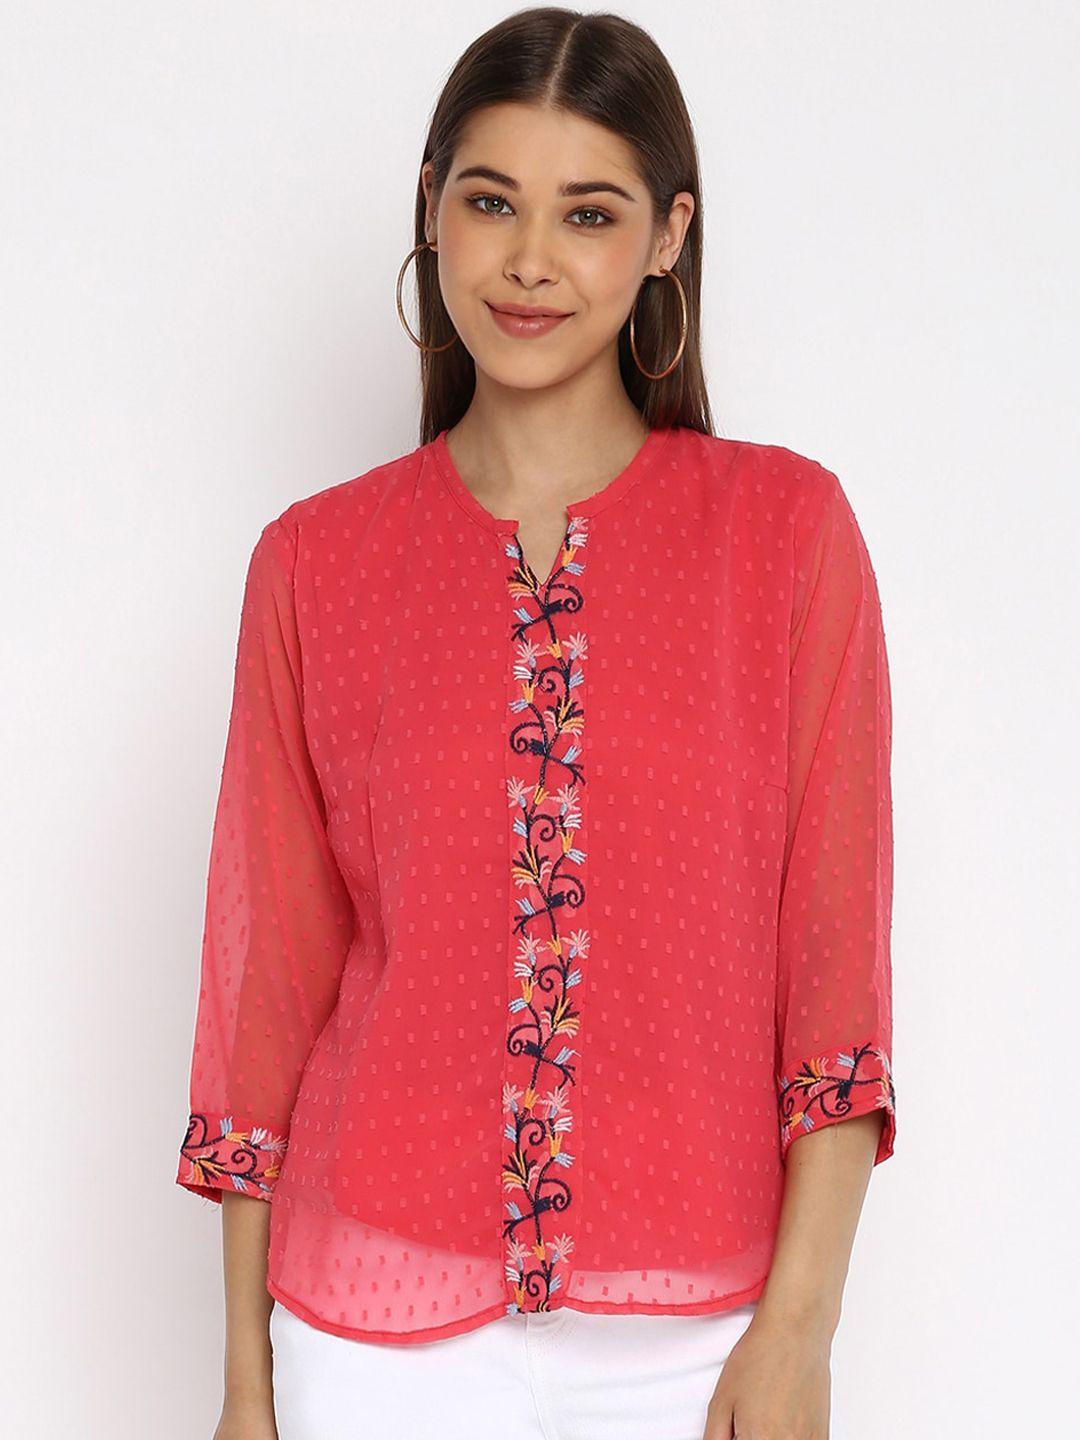 mayra pink mandarin collar georgette shirt style top